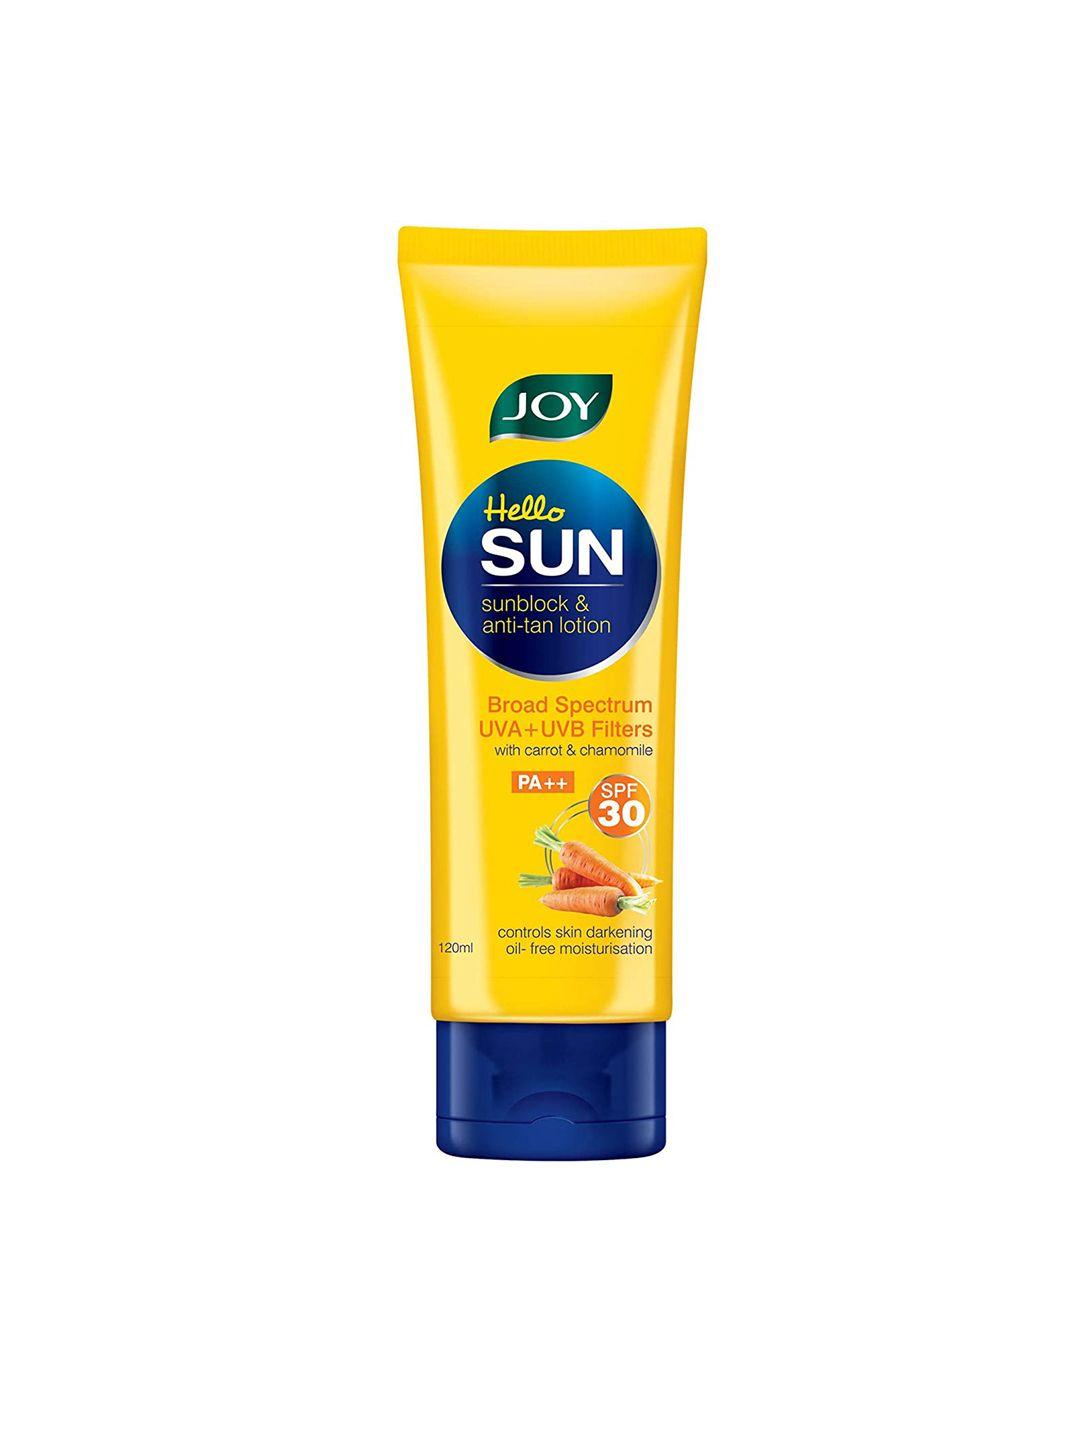 joy hello sun sunblock & anti-tan lotion spf 30 sunscreen 120 ml